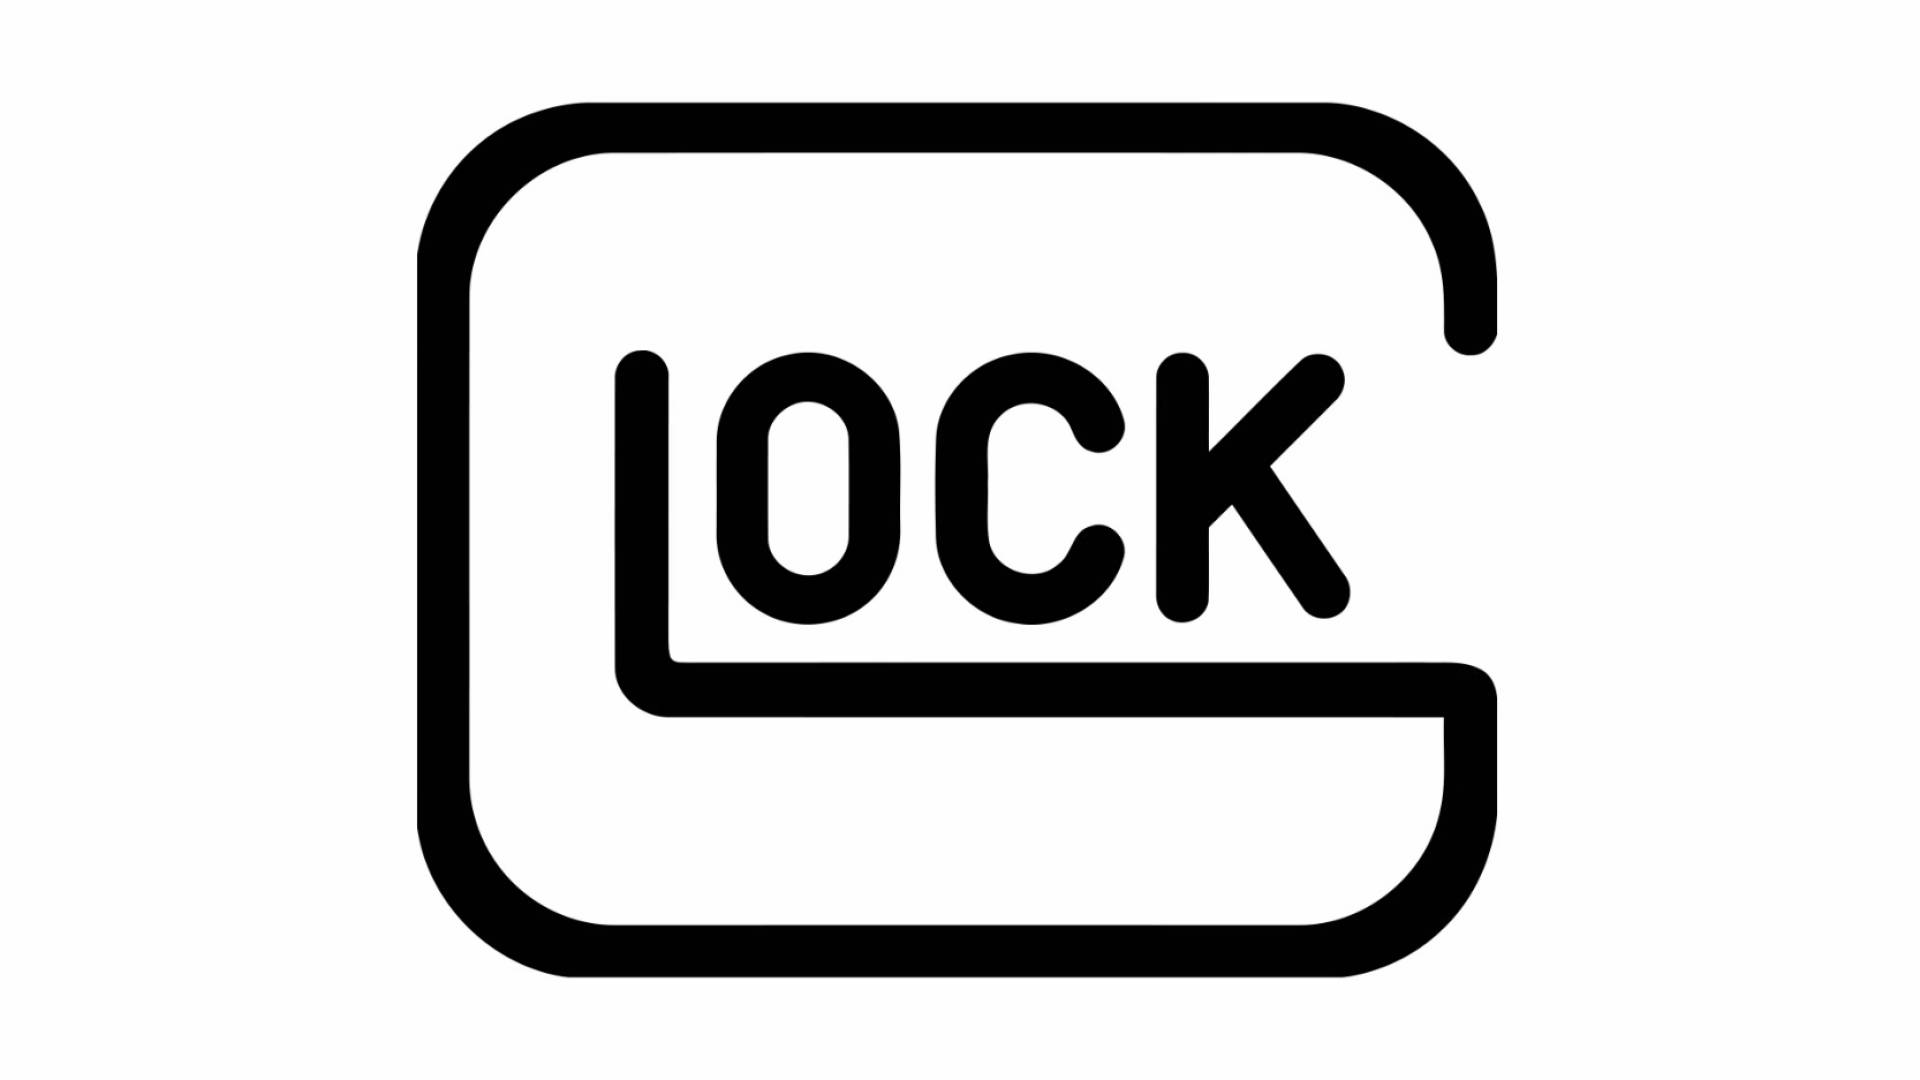 Minimalist Glock Icon Logo